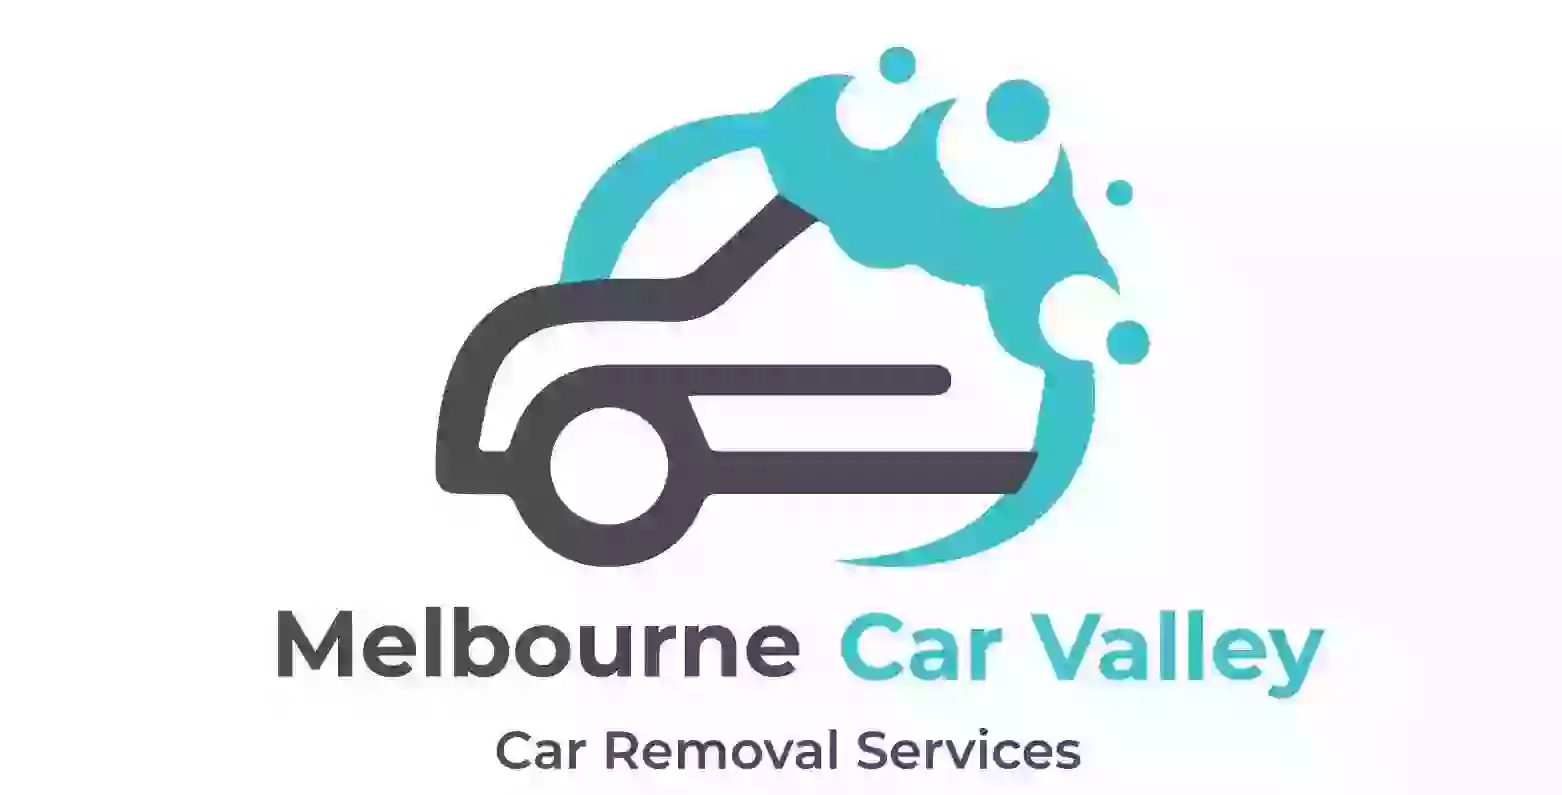  Melbourne Car
                Valley Car Removal Footer Logo 